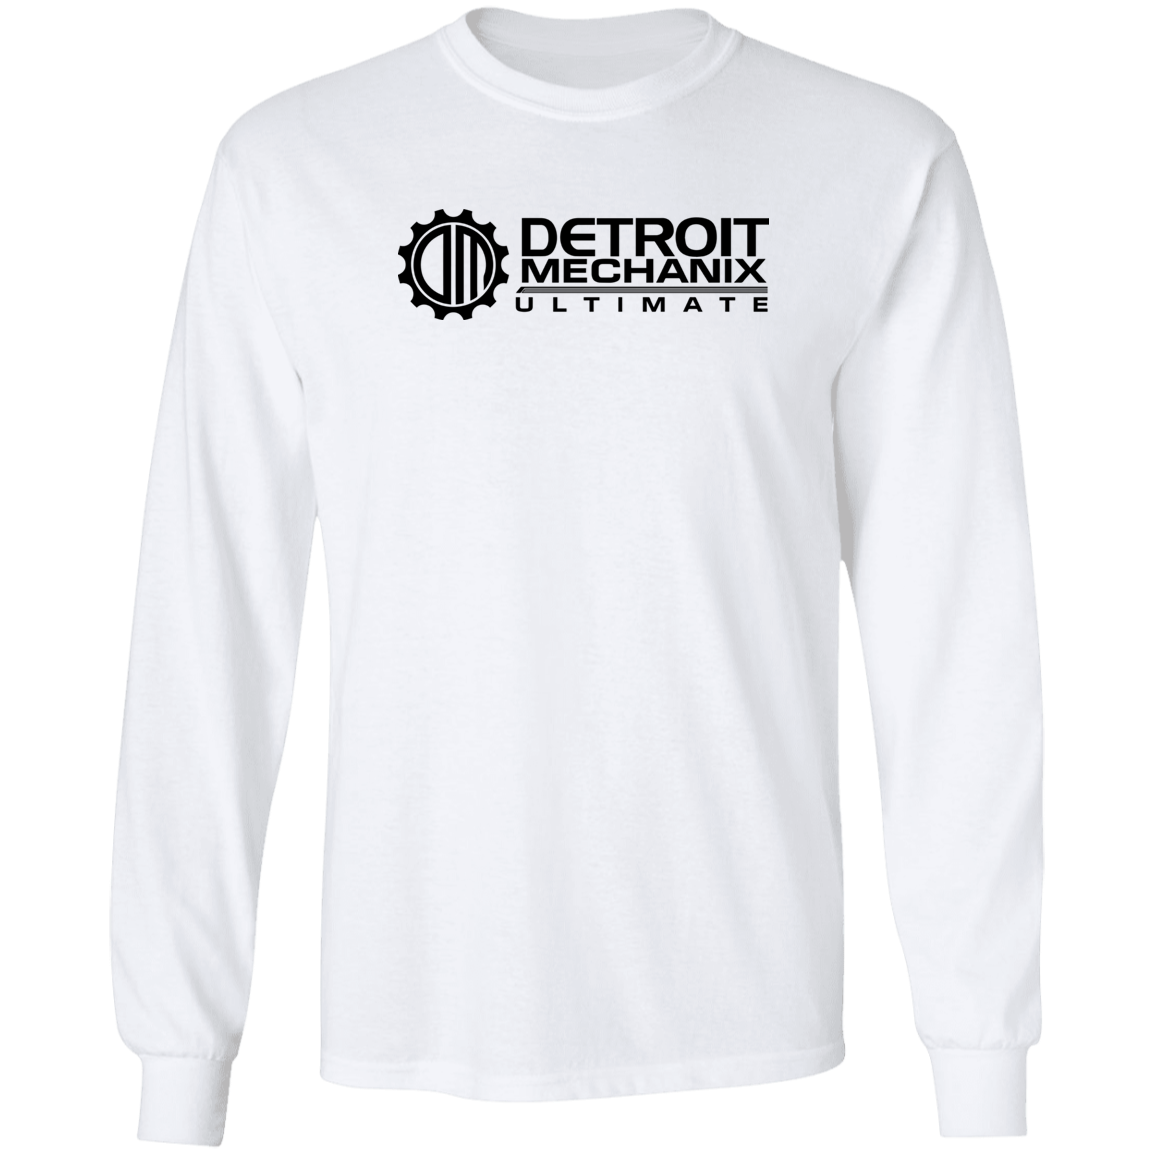 Detroit Mechanix Ultimate G240 LS Ultra Cotton T-Shirt